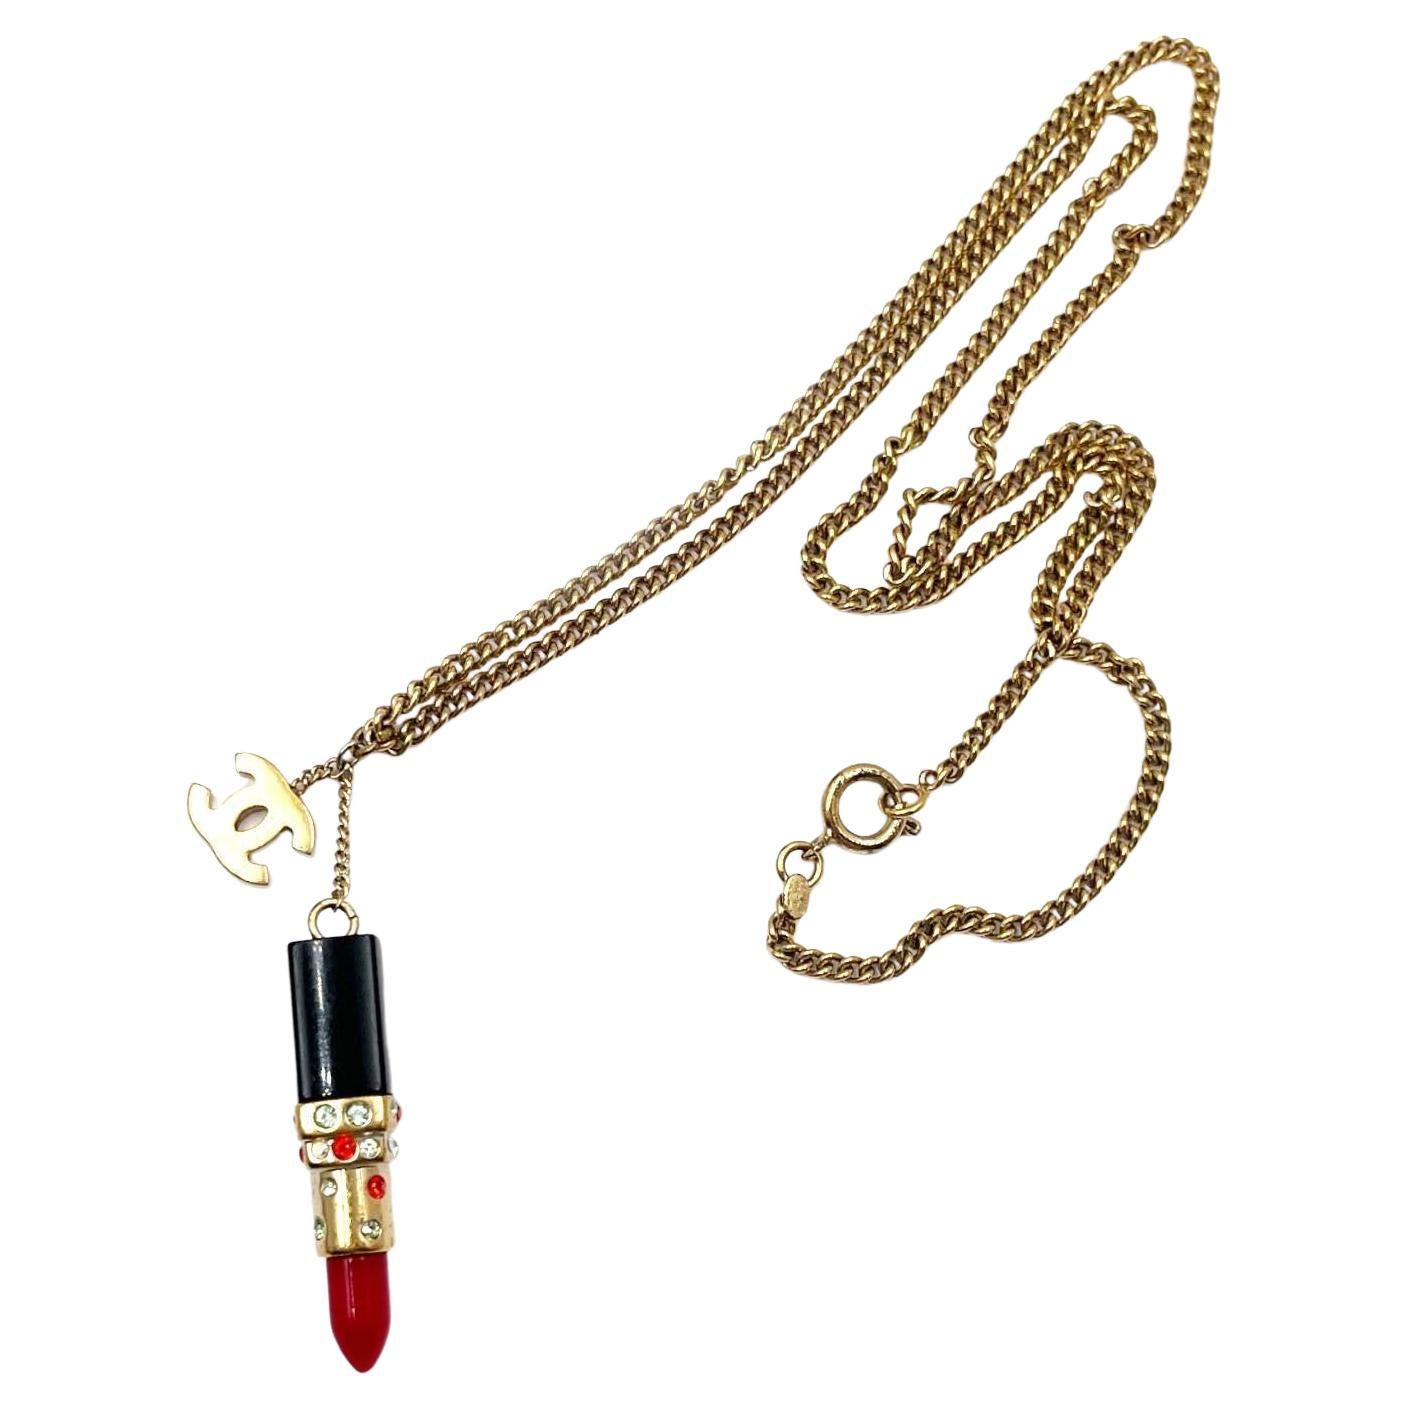 Chanel Seltene Vintage vergoldete CC Halskette mit großem rotem Lippenstift-Anhänger, vergoldet